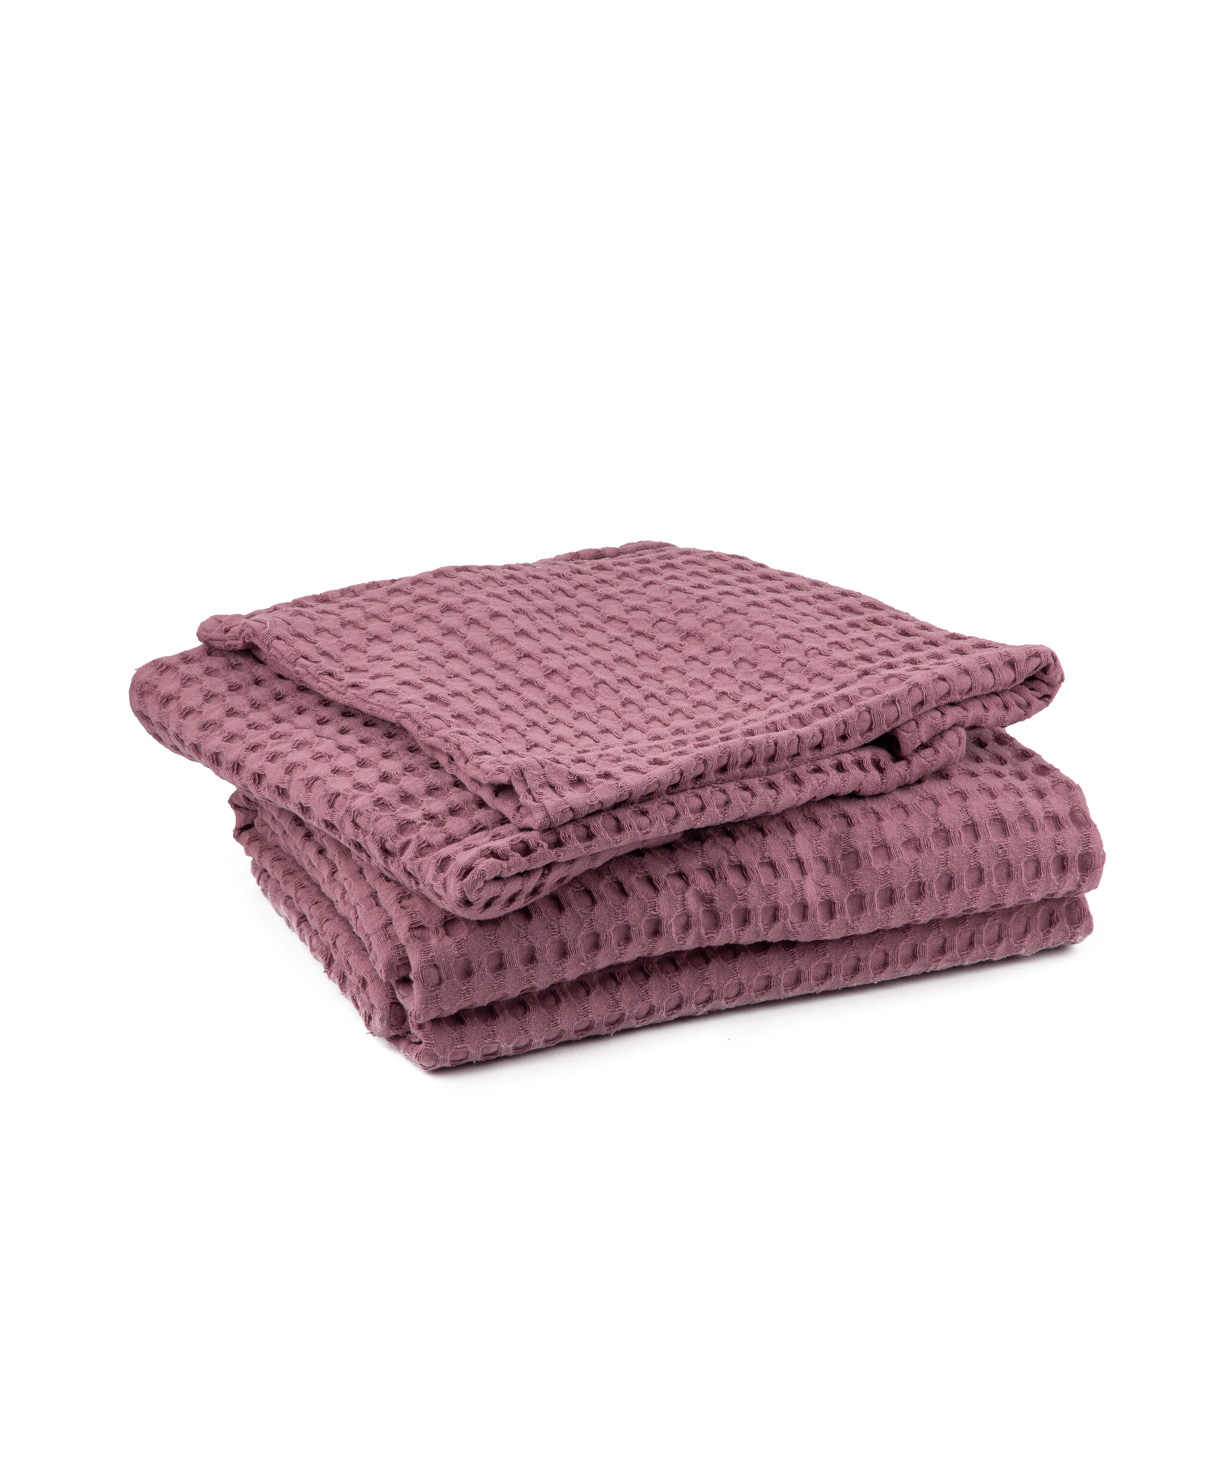 Одеяло и наволочки «ZA Handmade» из хлопка, розовые